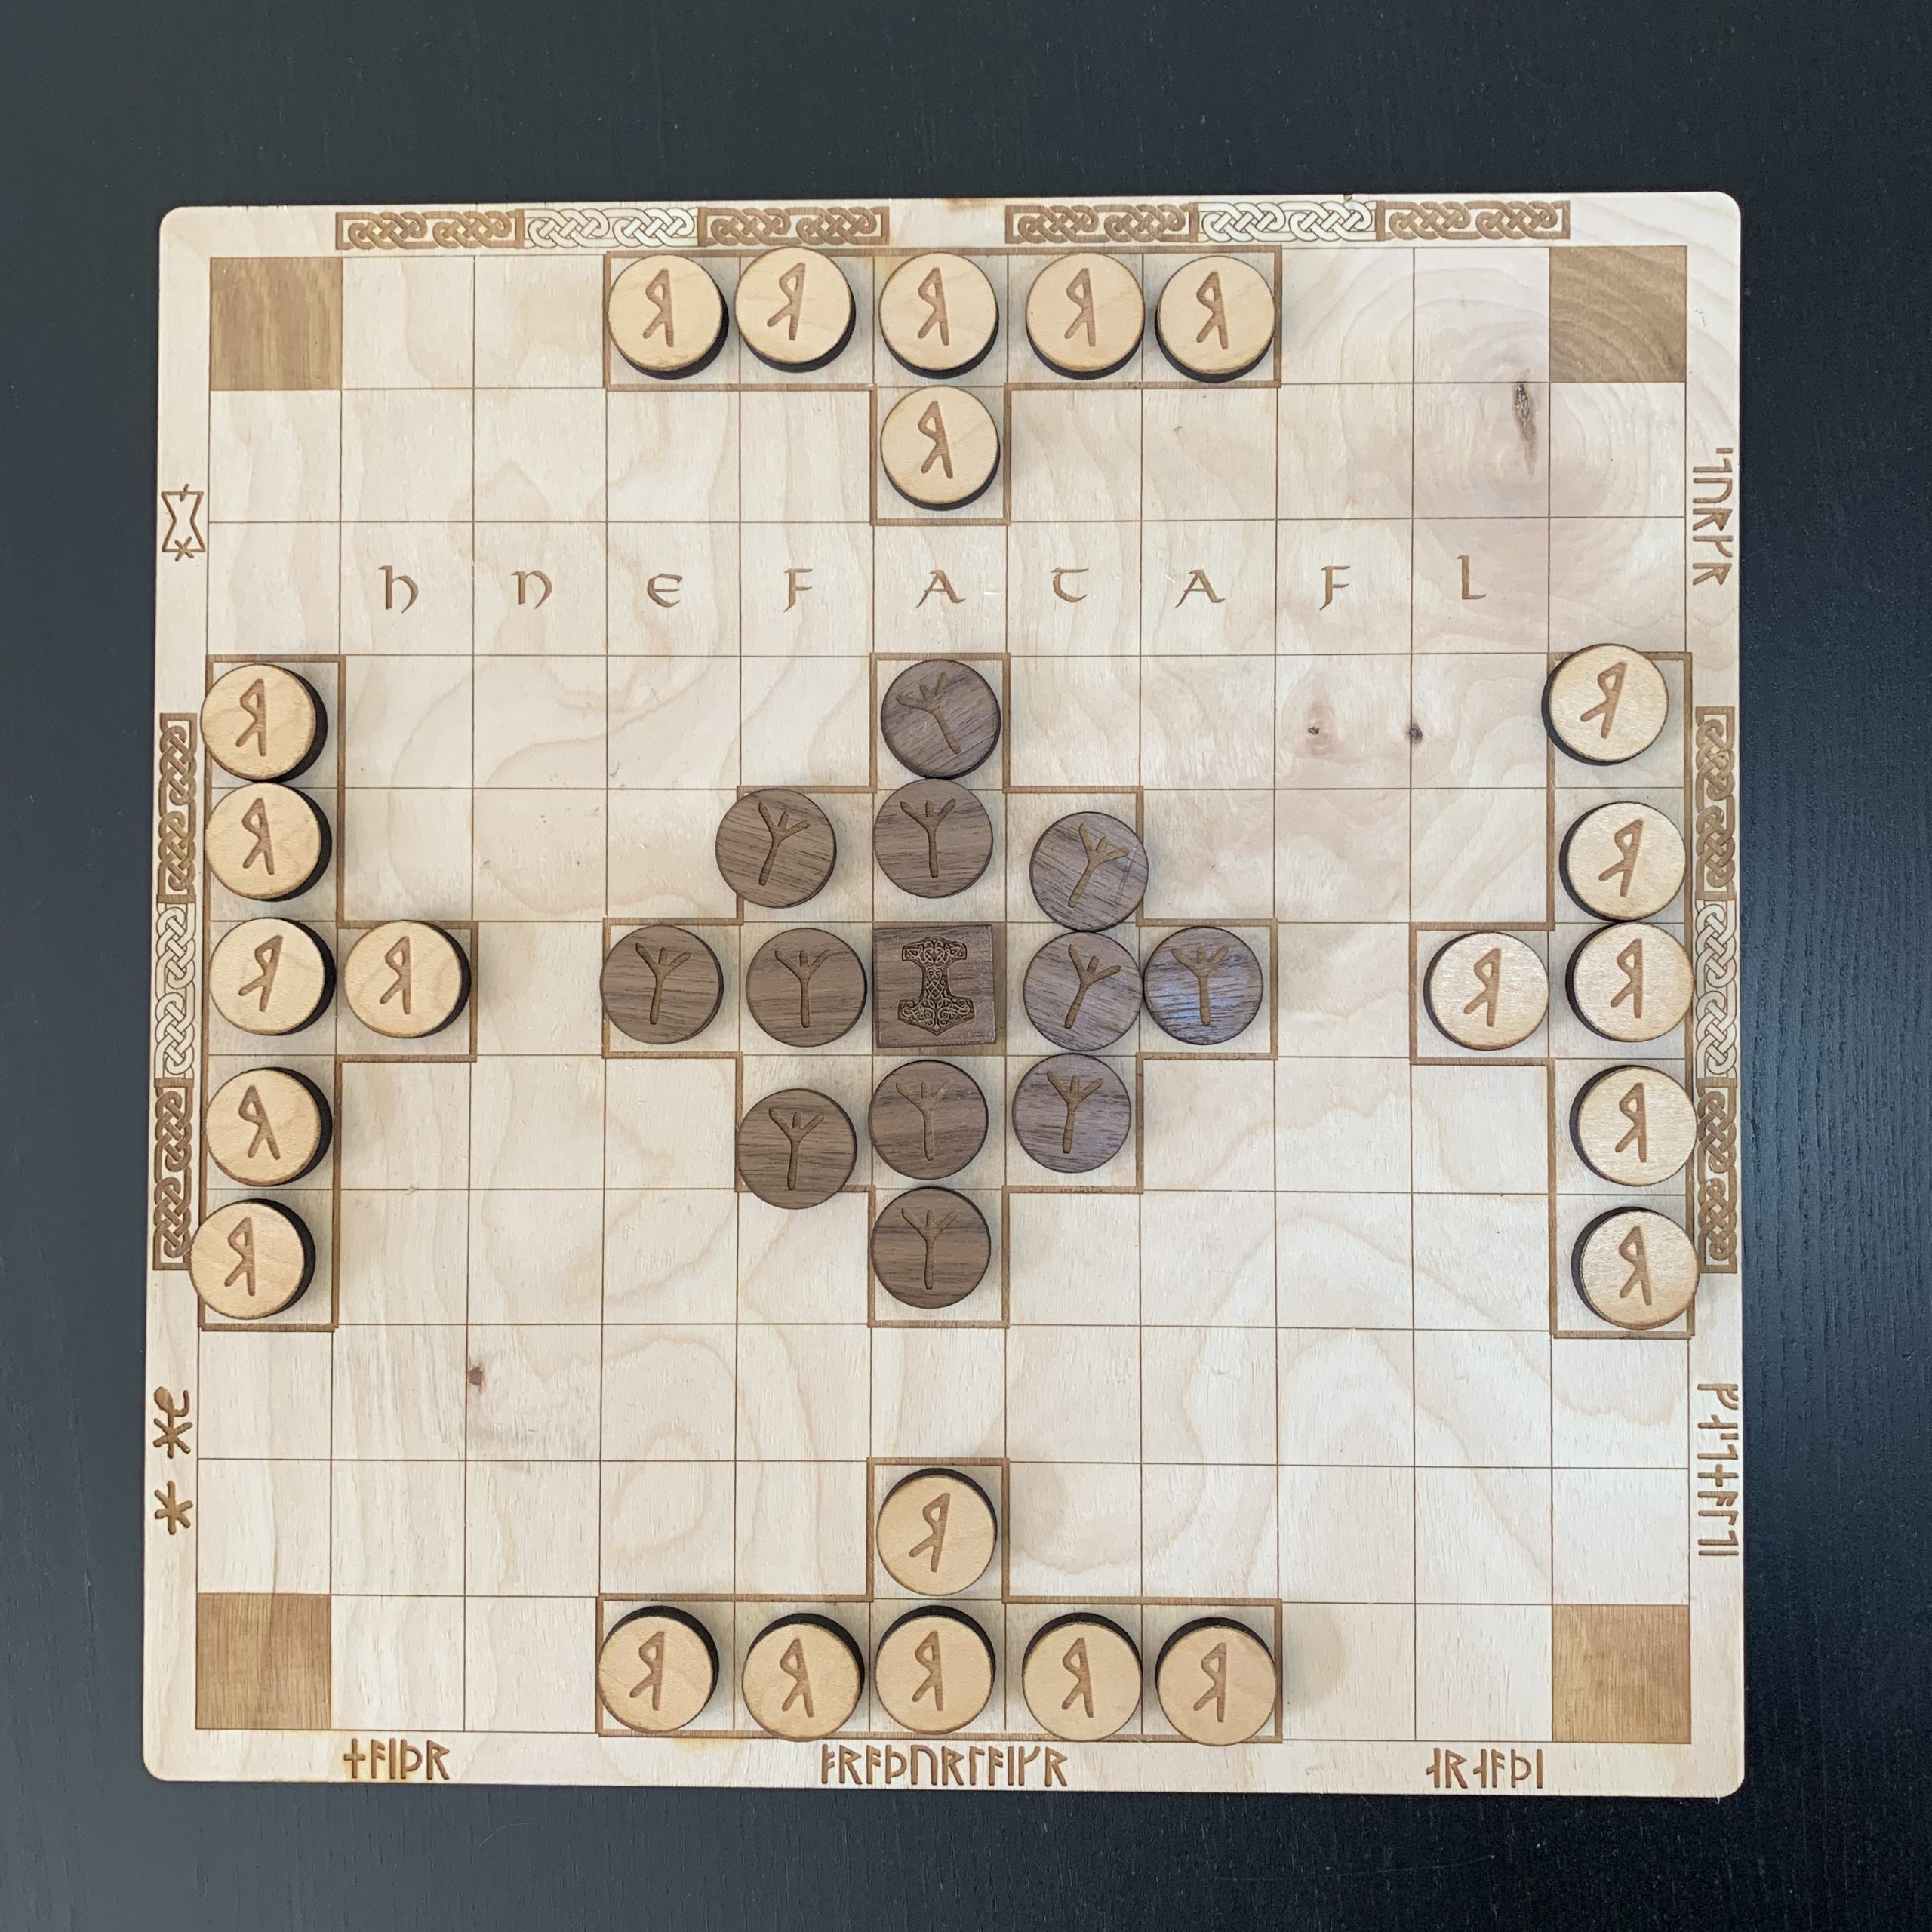 Hnefltafl - Viking Chess Game